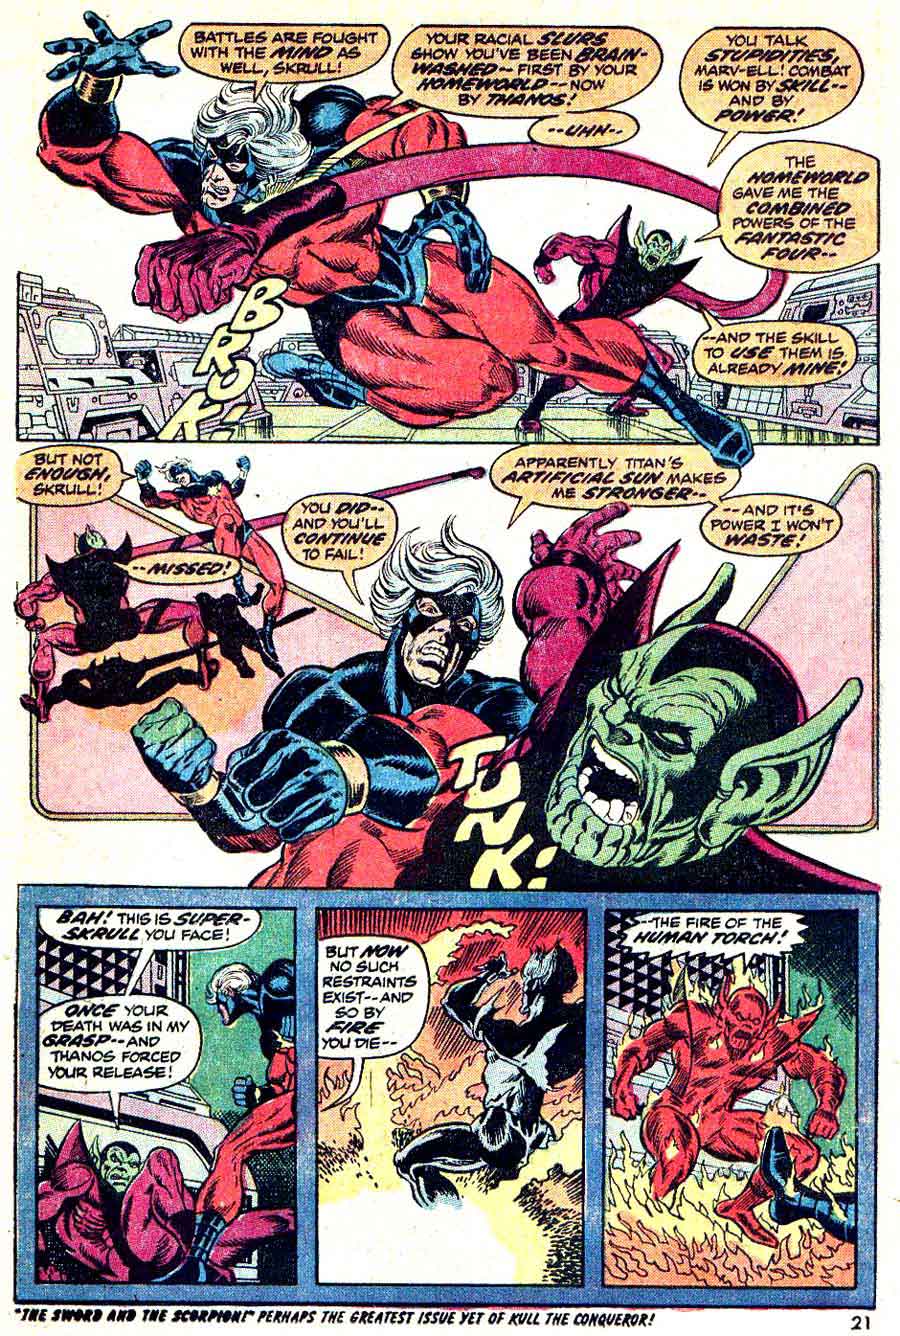 Captain Marvel #27 - Jim Starlin marvel key issue 1970s bronze age comic book page - 1st appearance Eros Starfox